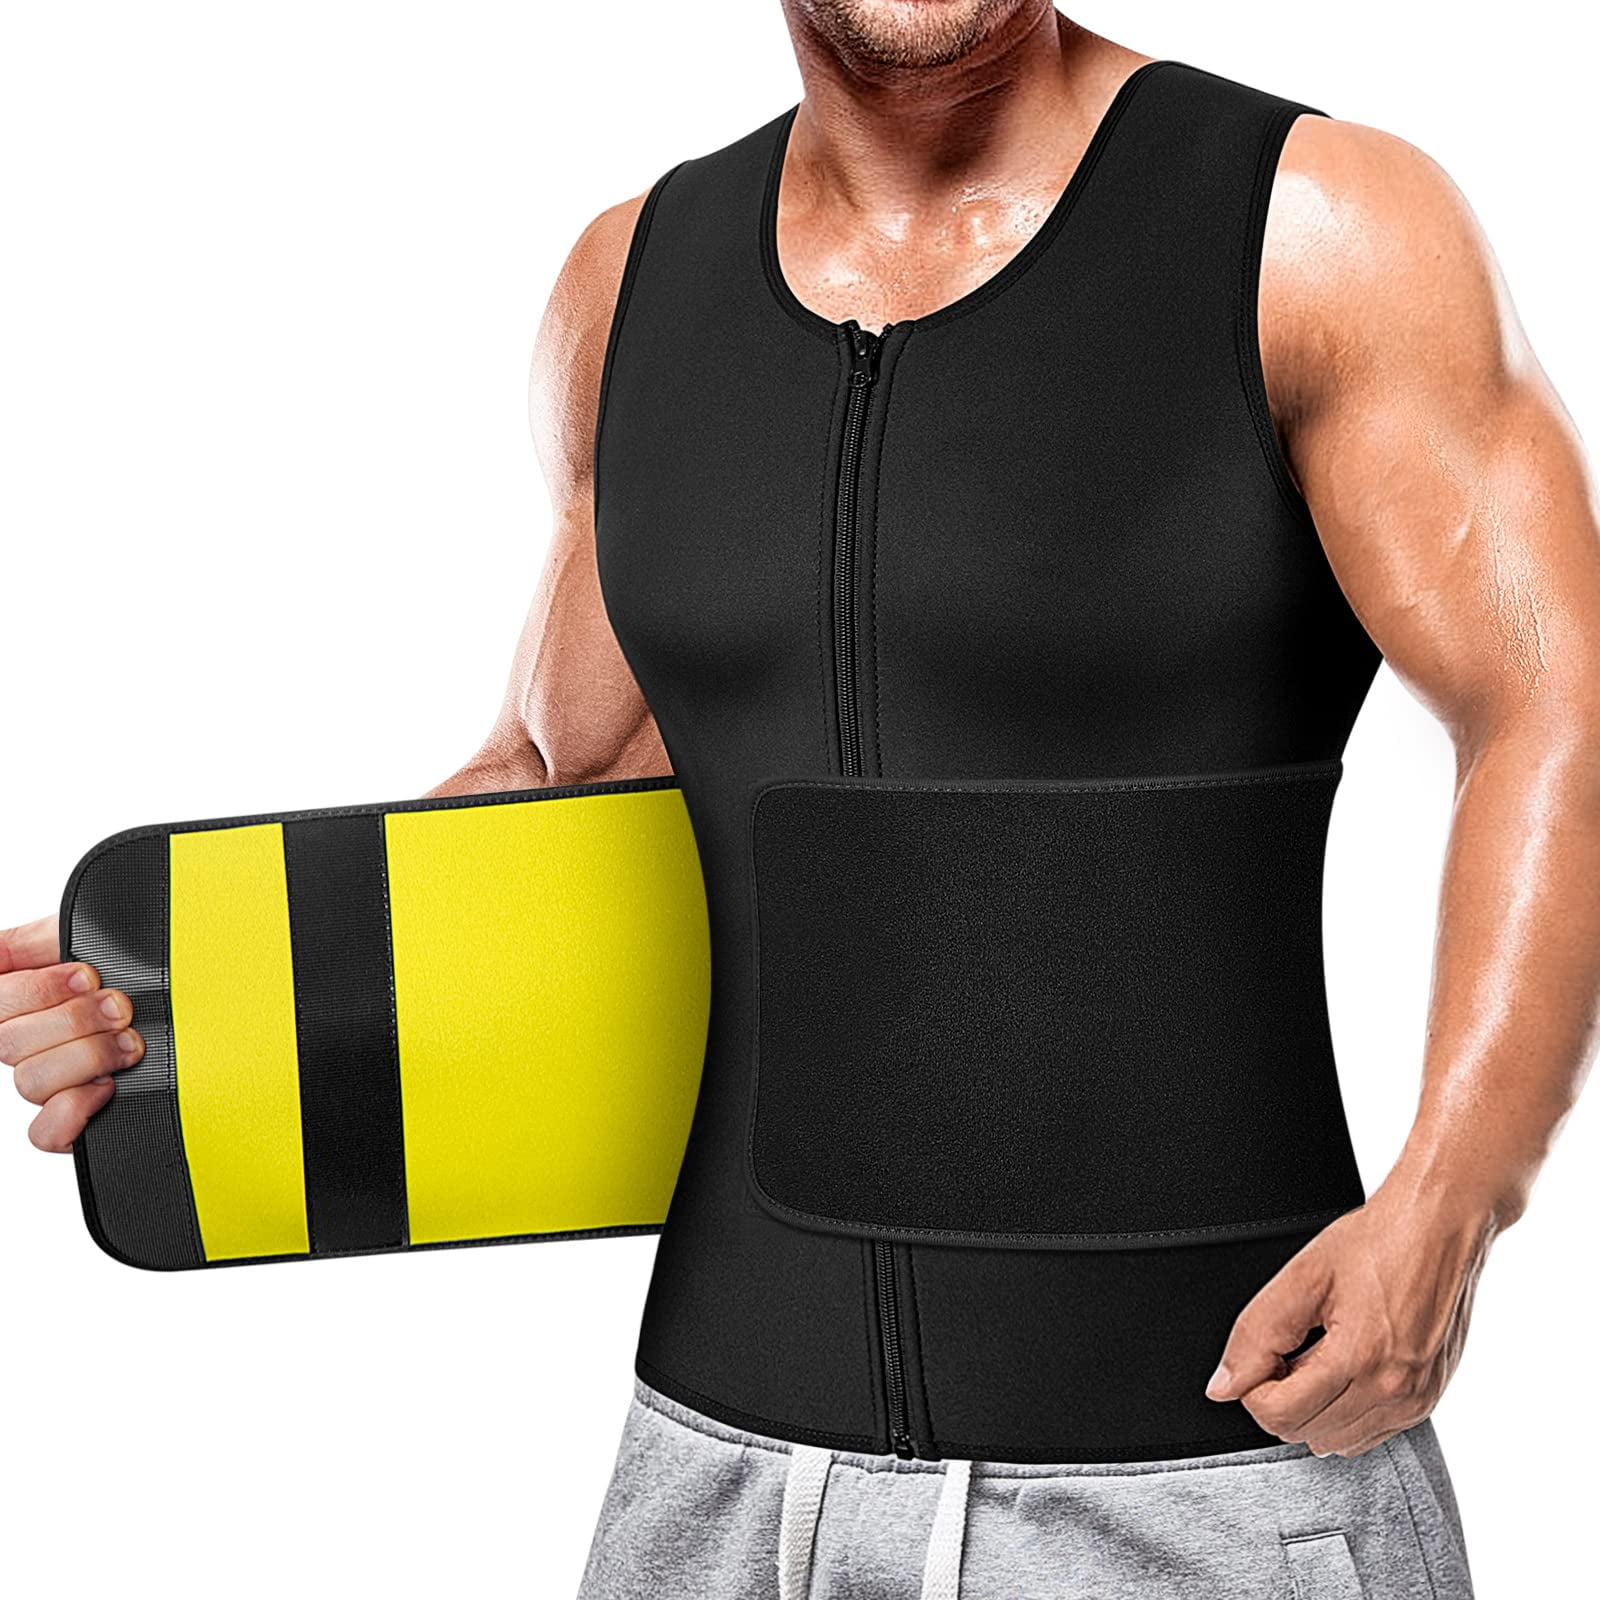 Cimkiz Sauna Sweat Vest for Men Sauna Suit Workout Slimming Body Shaper 3XL